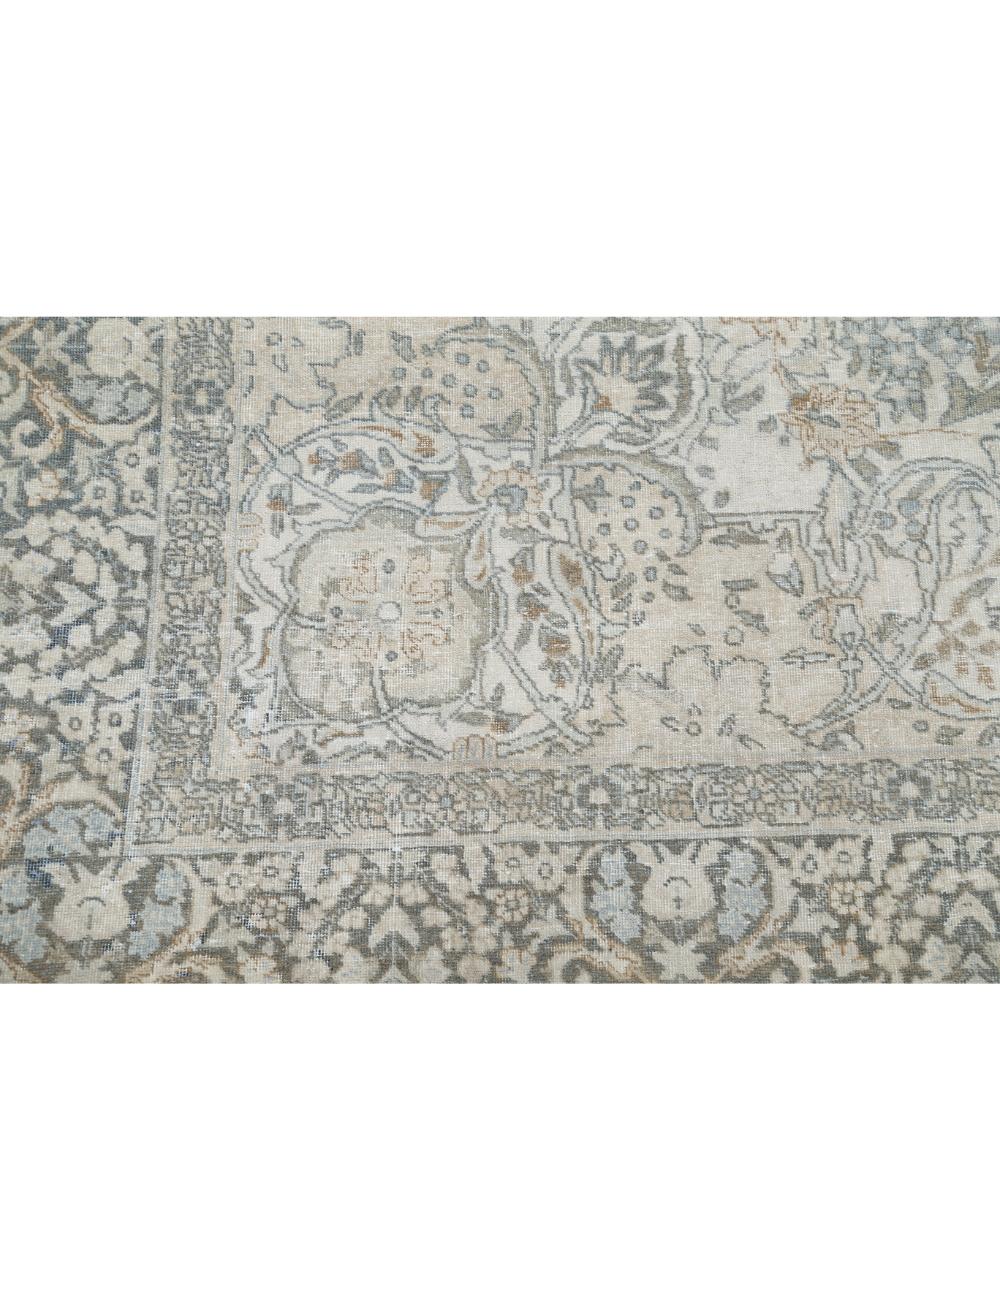 Hand Knotted Vintage Persian Tabriz Wool Rug - 8'2'' x 11'8'' Arteverk Arteverk Rugs